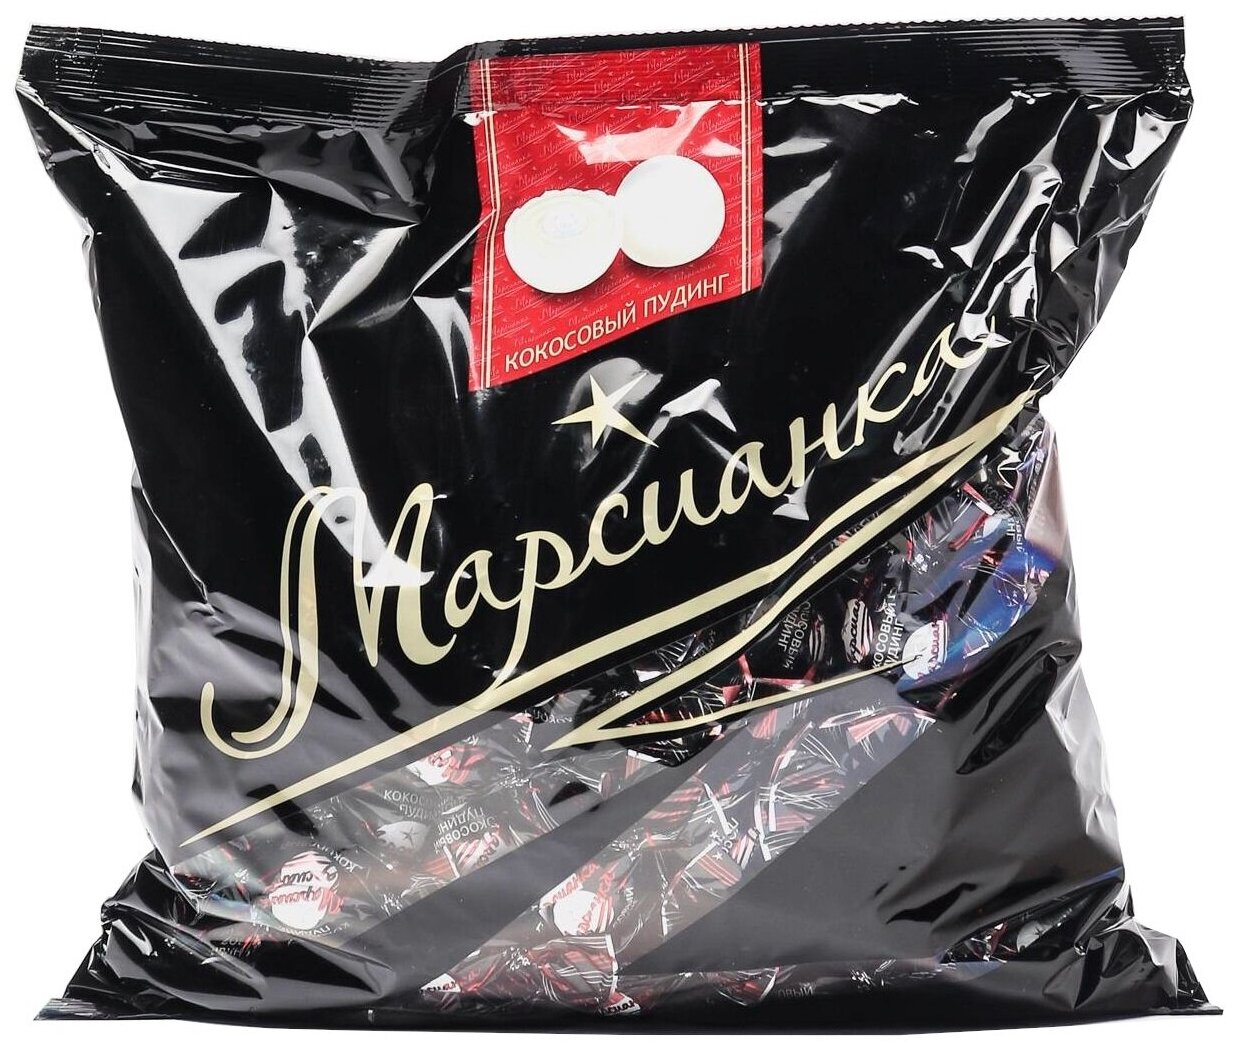 Конфеты Марсианка Кокосовый пудинг, 1 кг